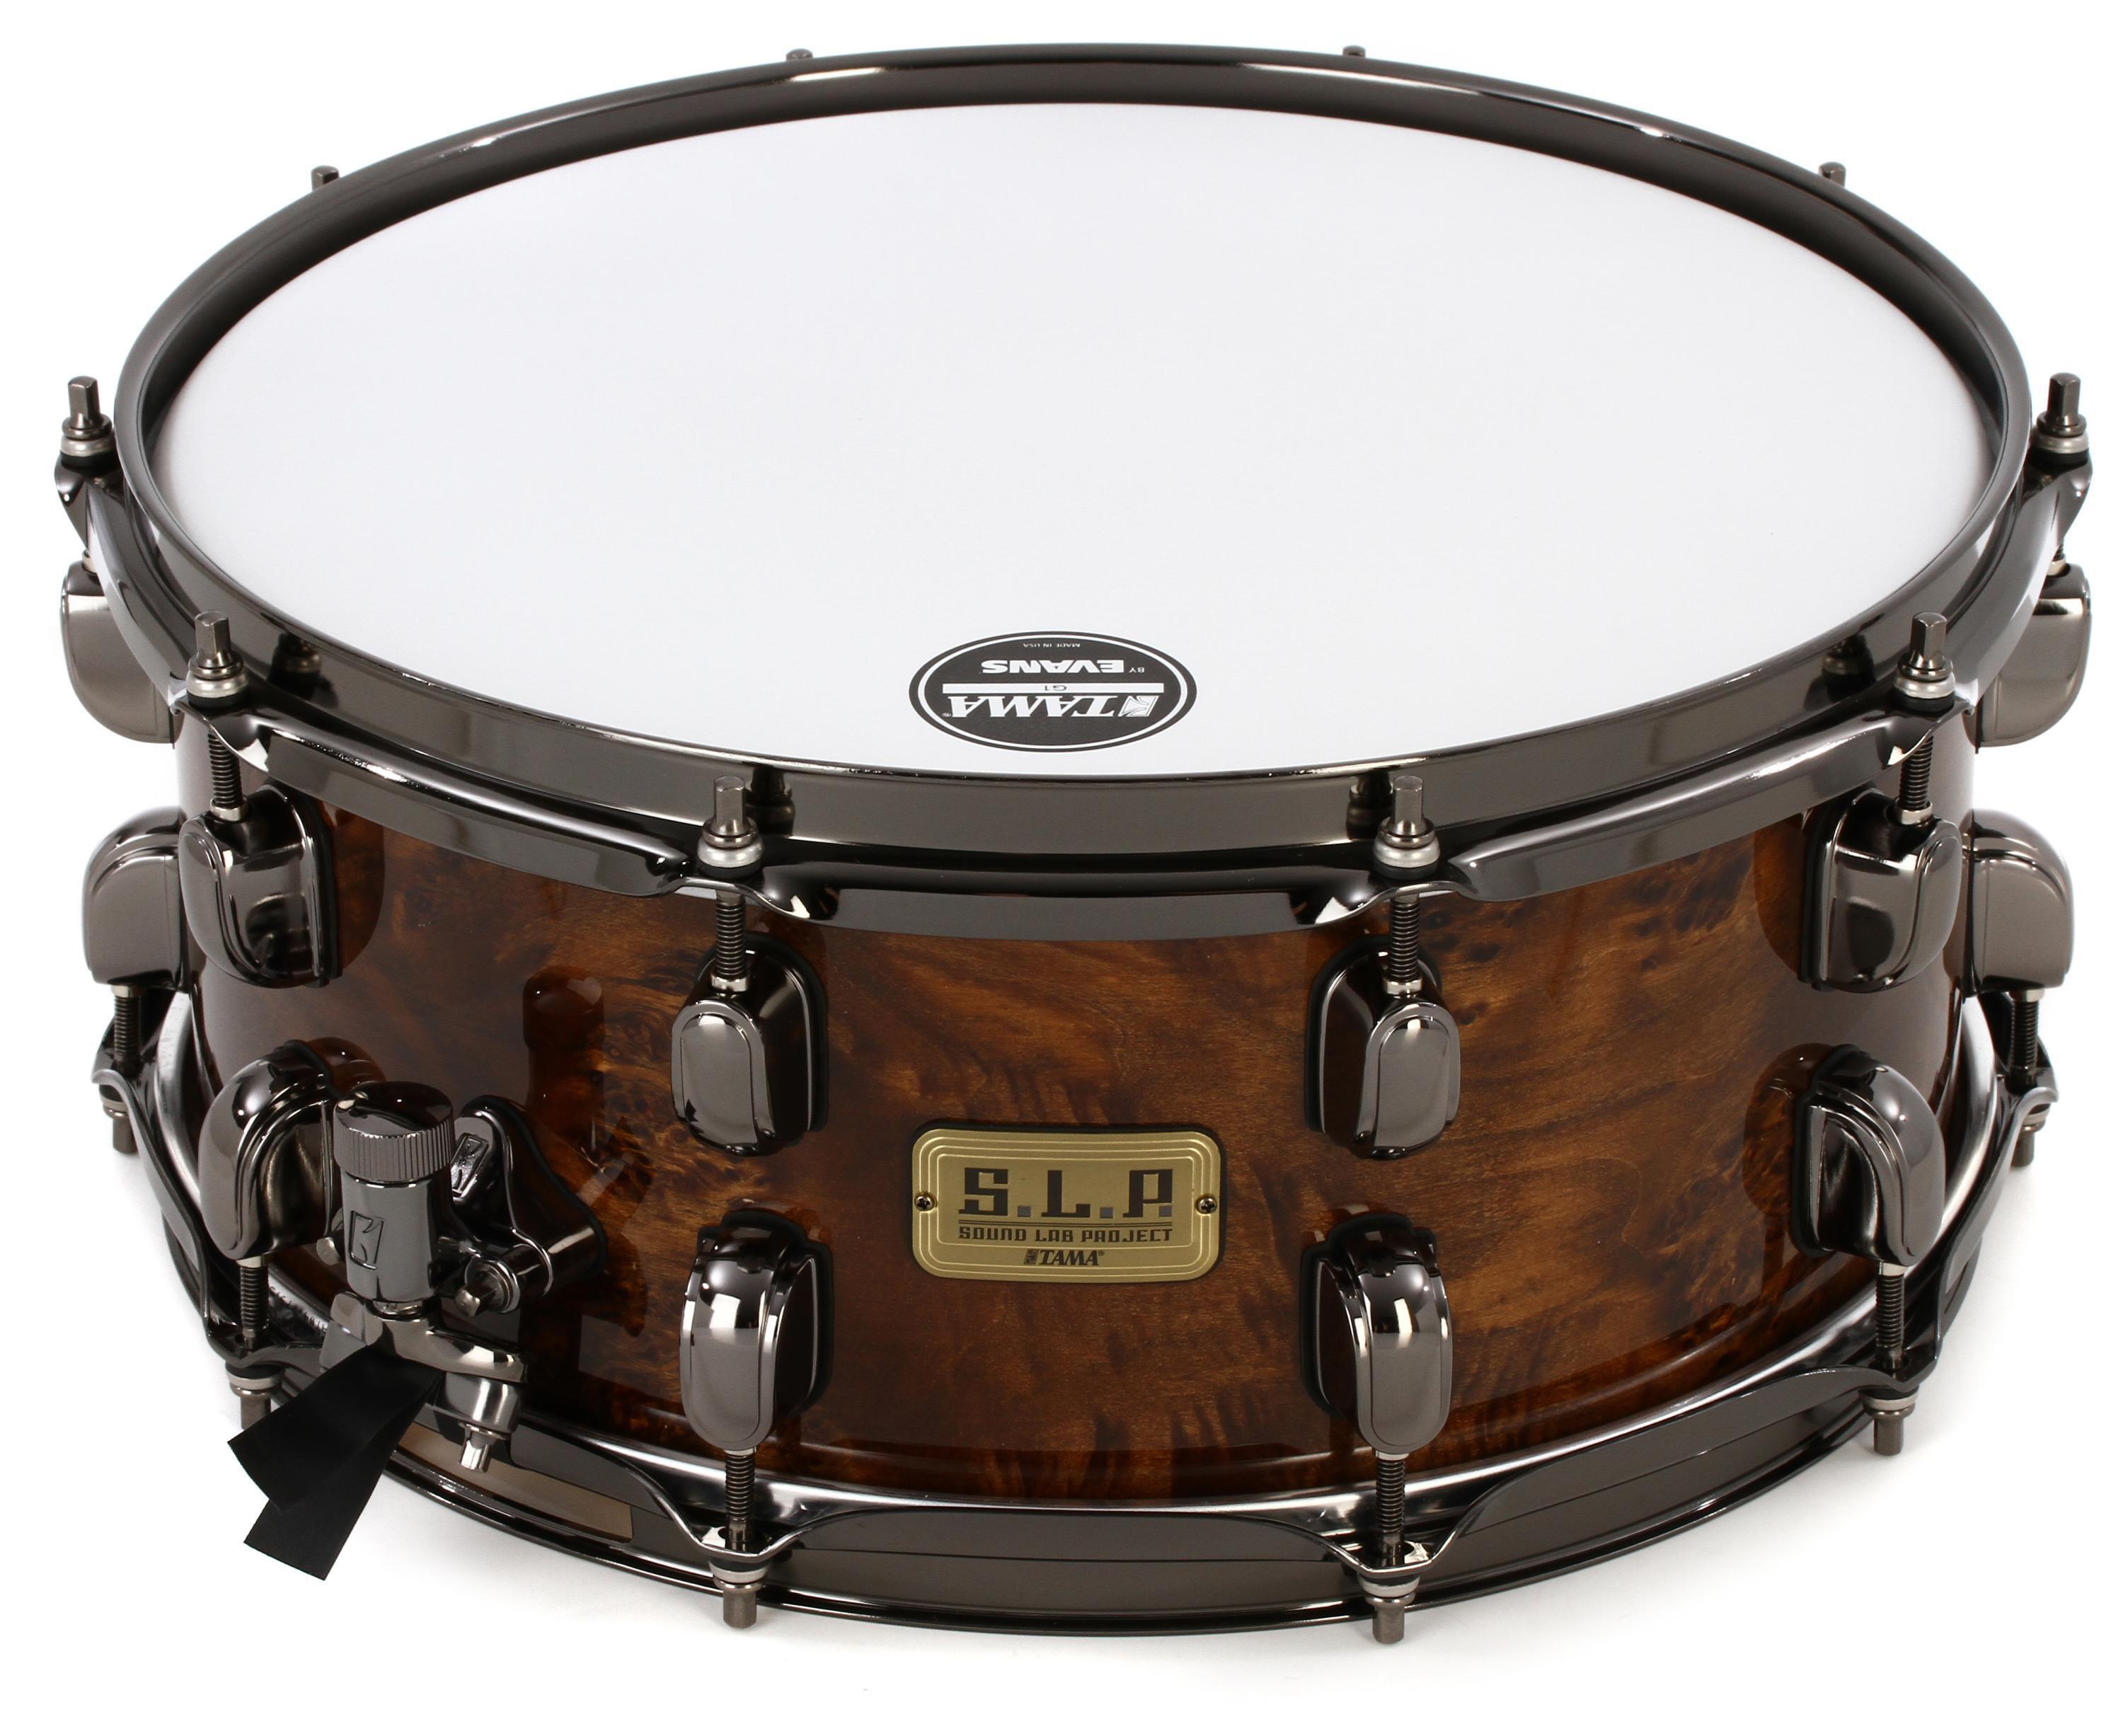 Tama S.L.P. G-Maple Snare Drum - 6 x 14 inch